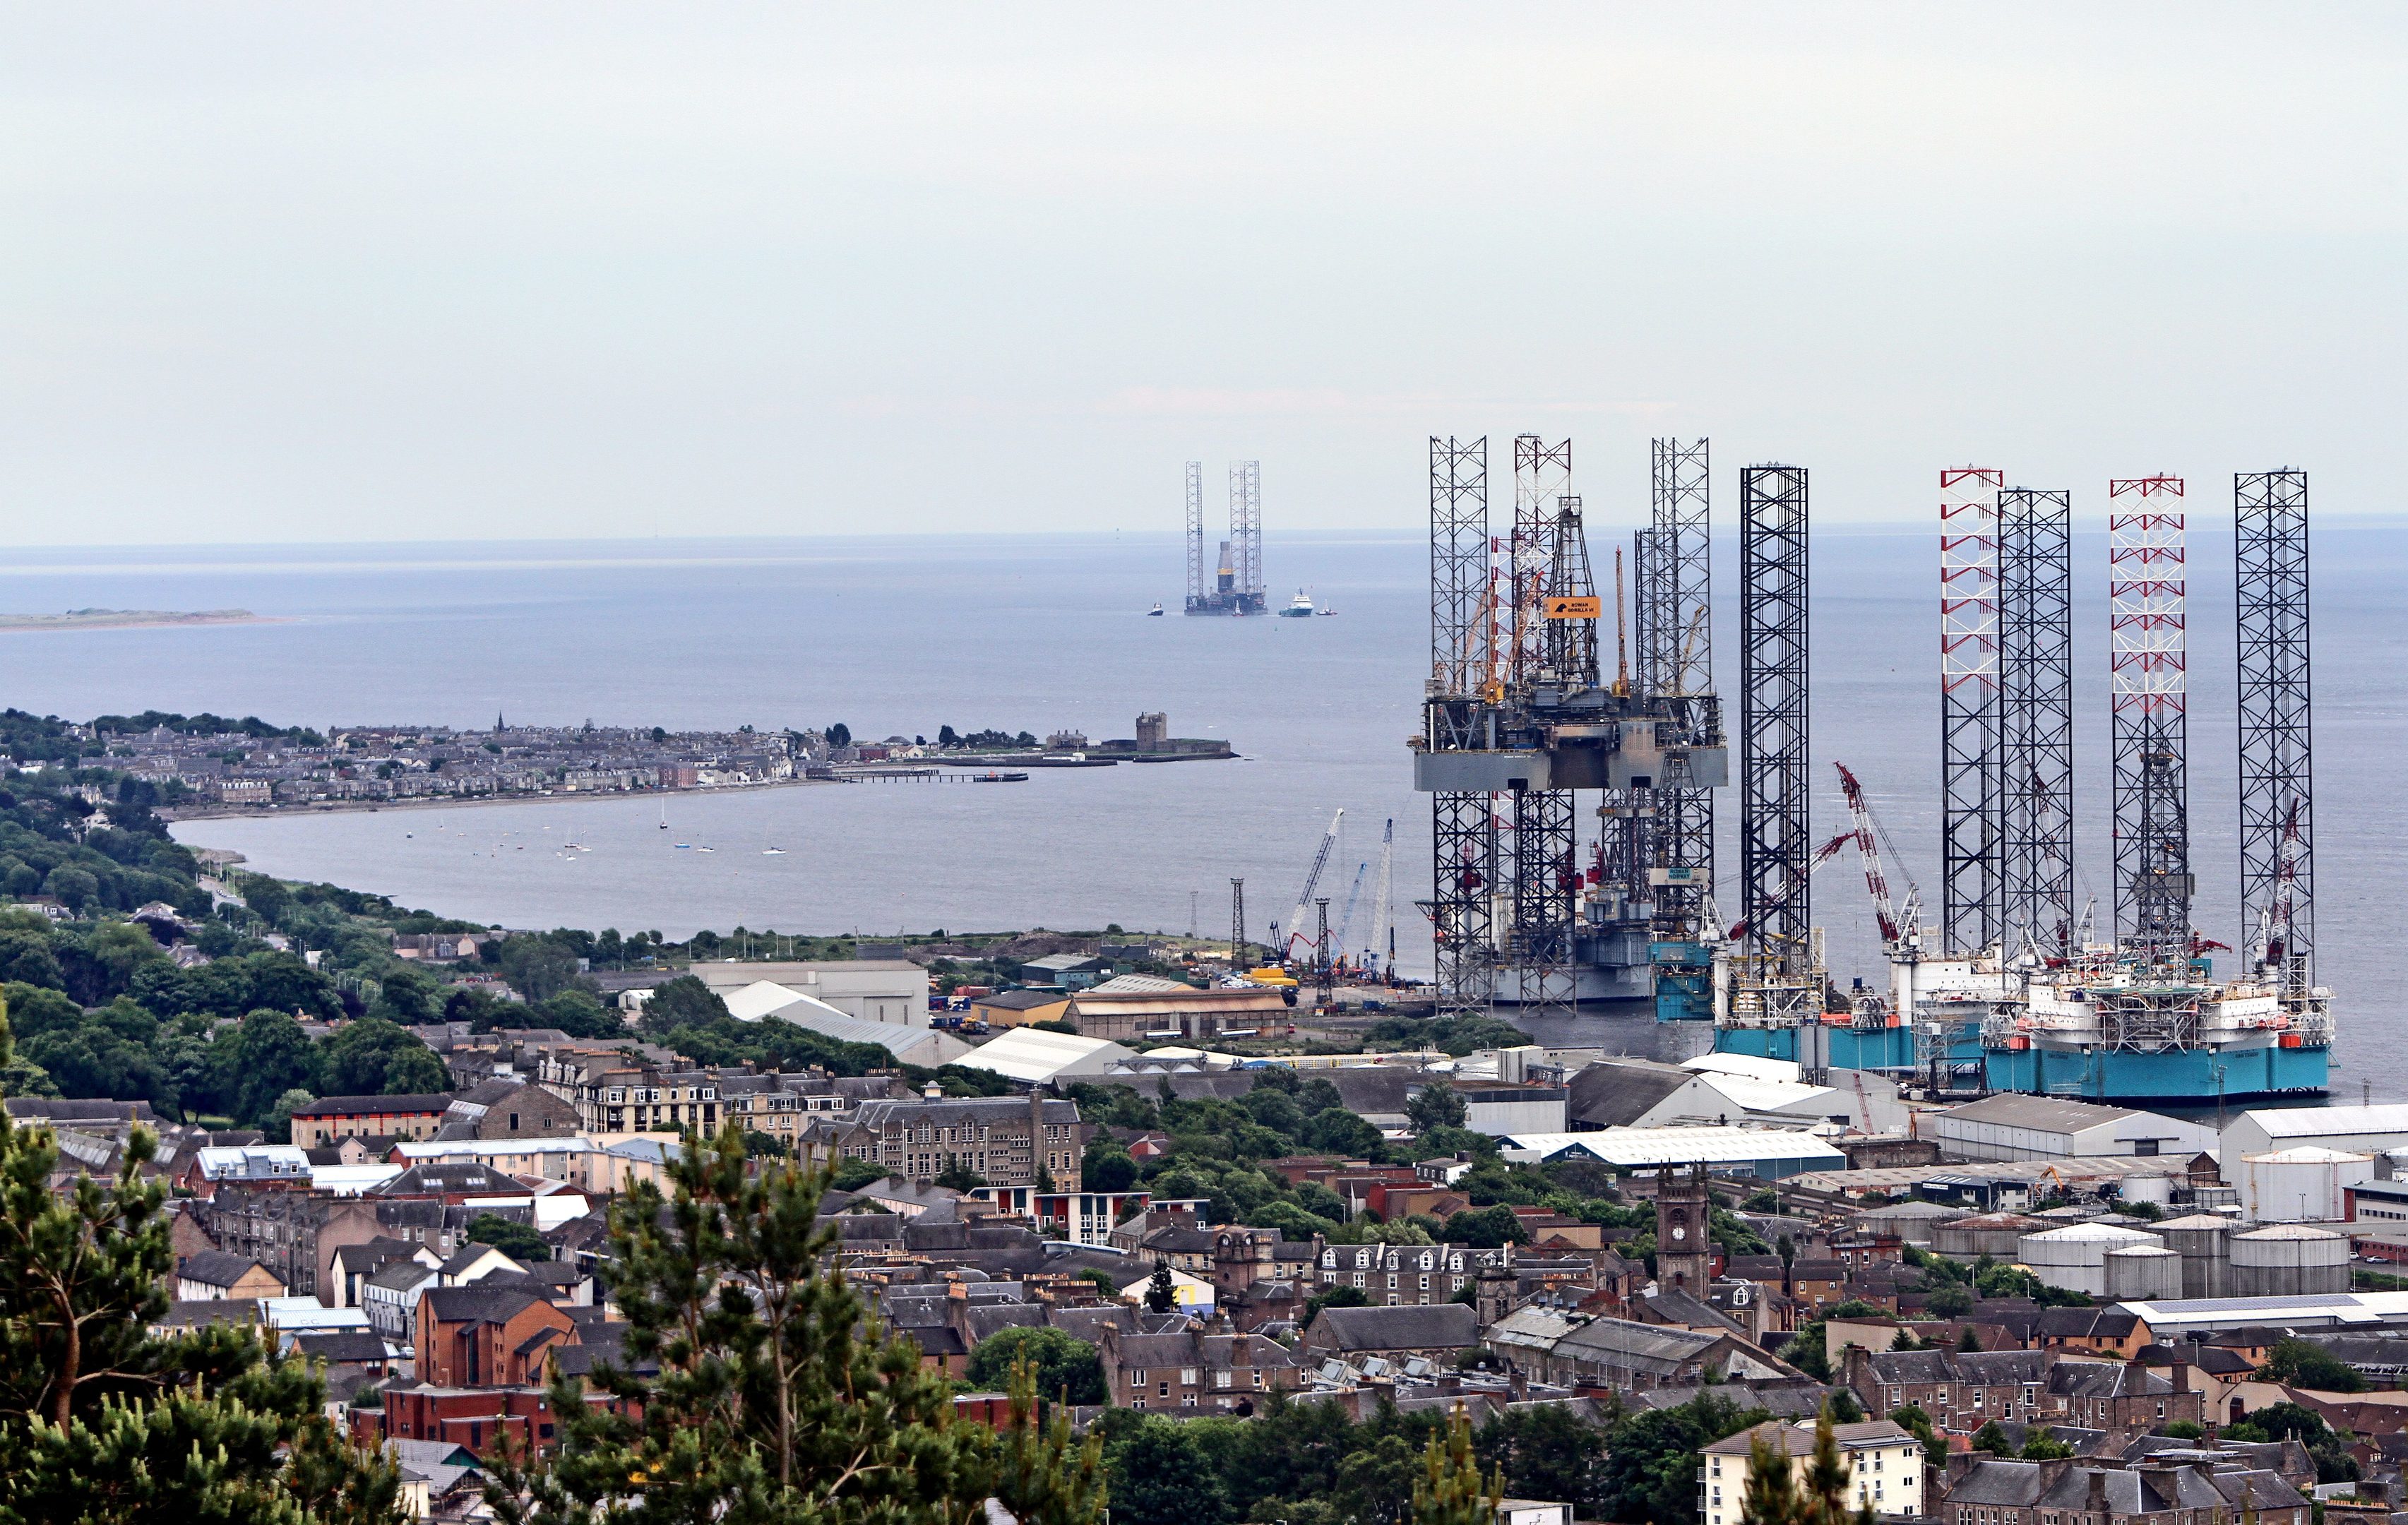 The Rowan Gorilla V Oil Rig arrives in Dundee Port.